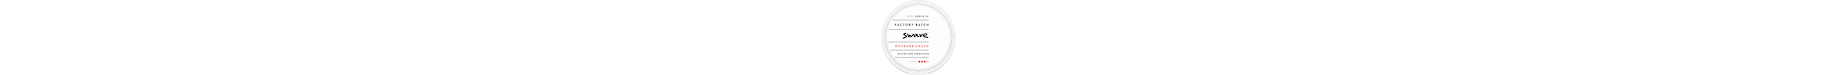 Swave Factory Batch IX Rhubarb Smash Slim Strong